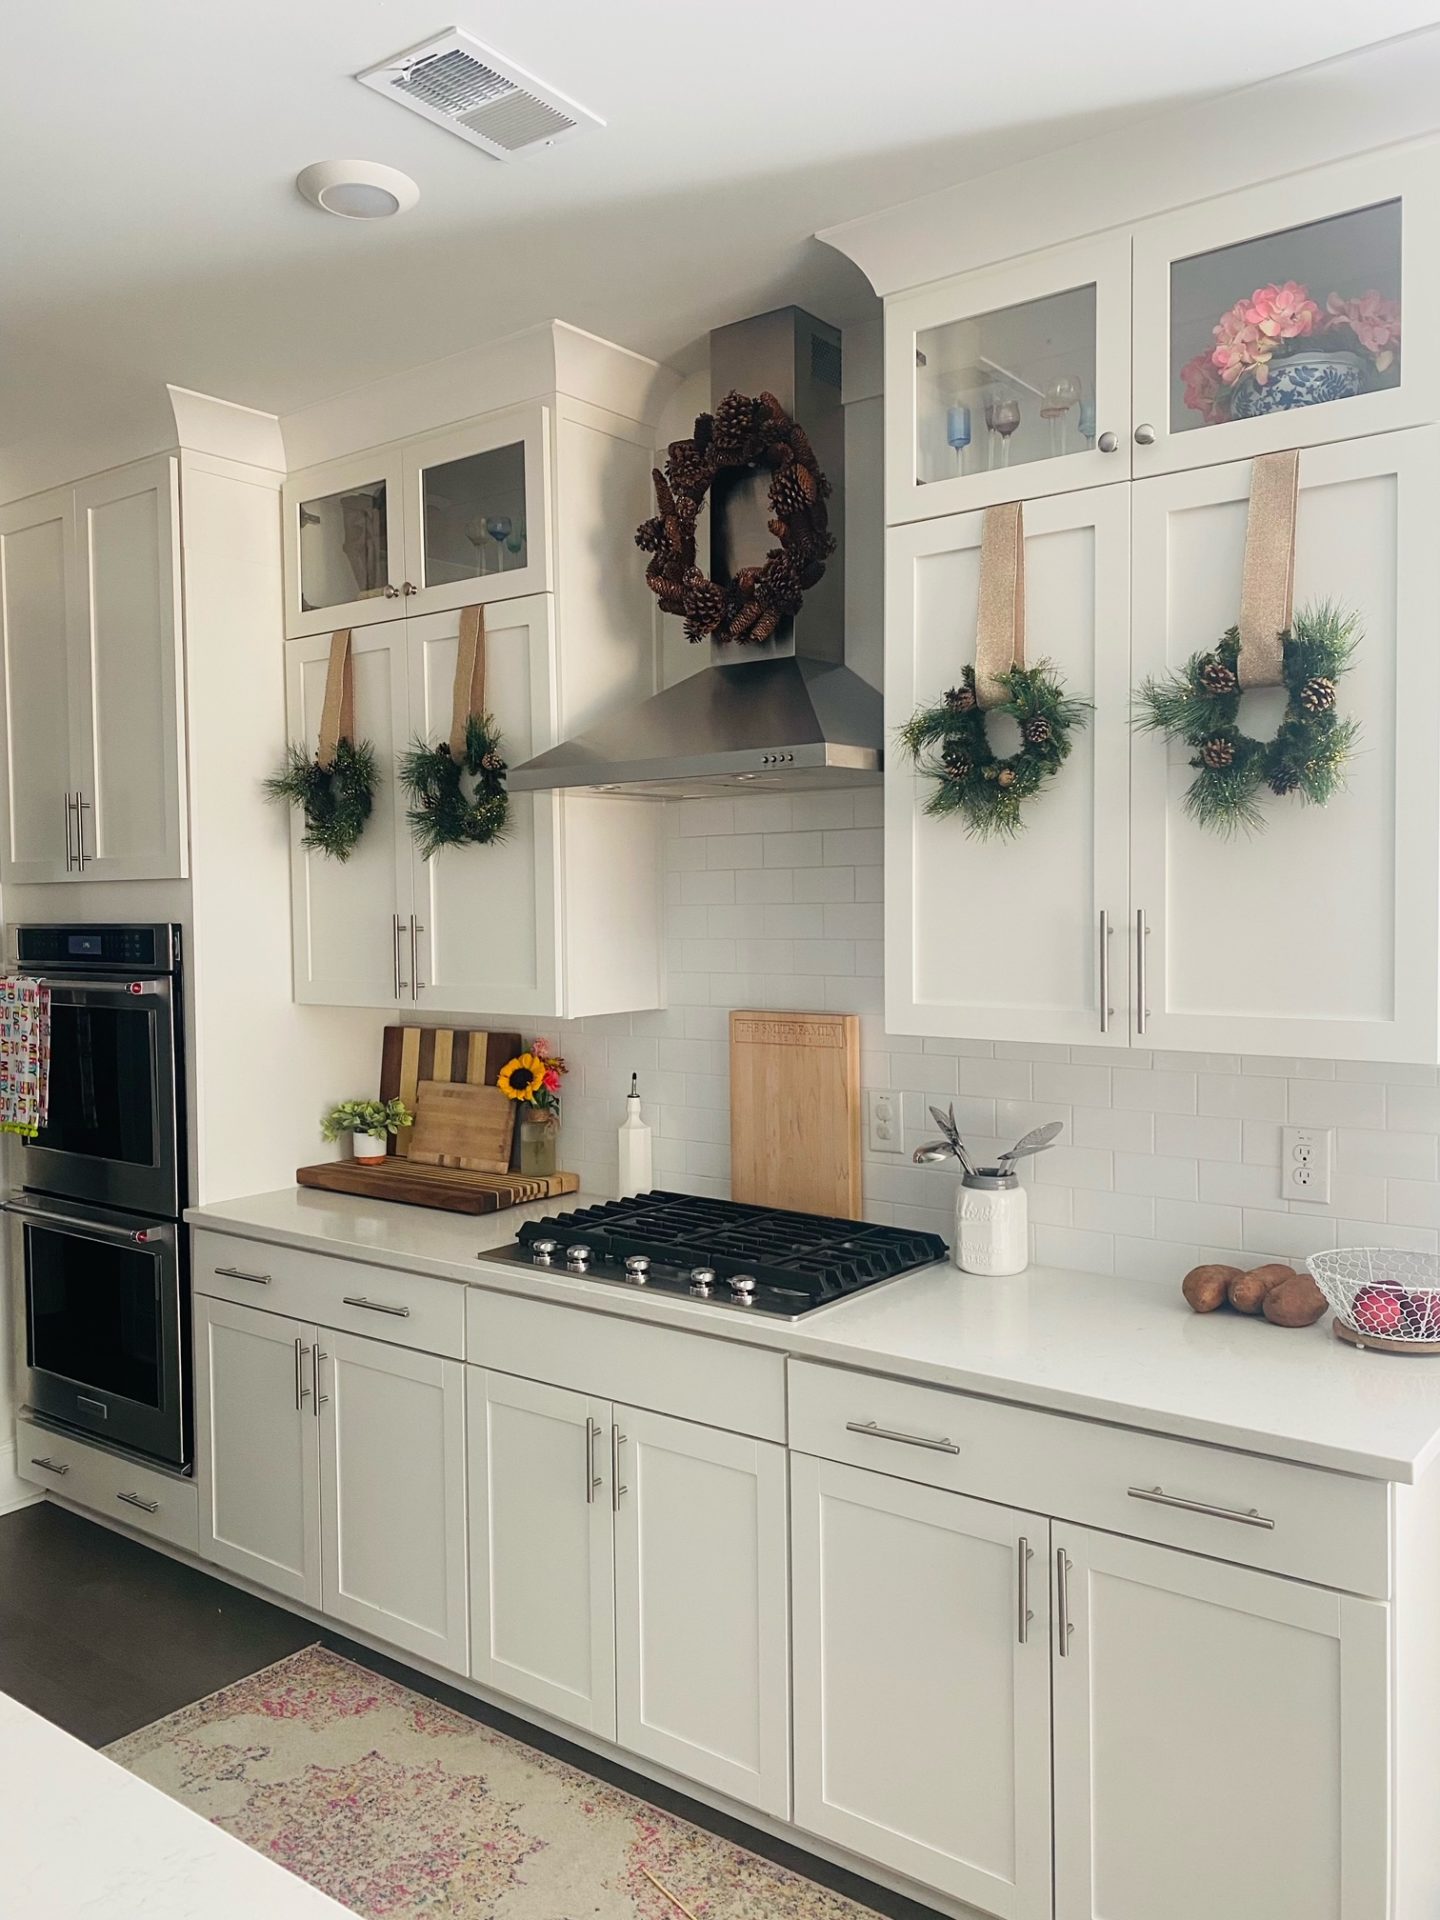 DIY Kitchen Cabinet Christmas Wreaths